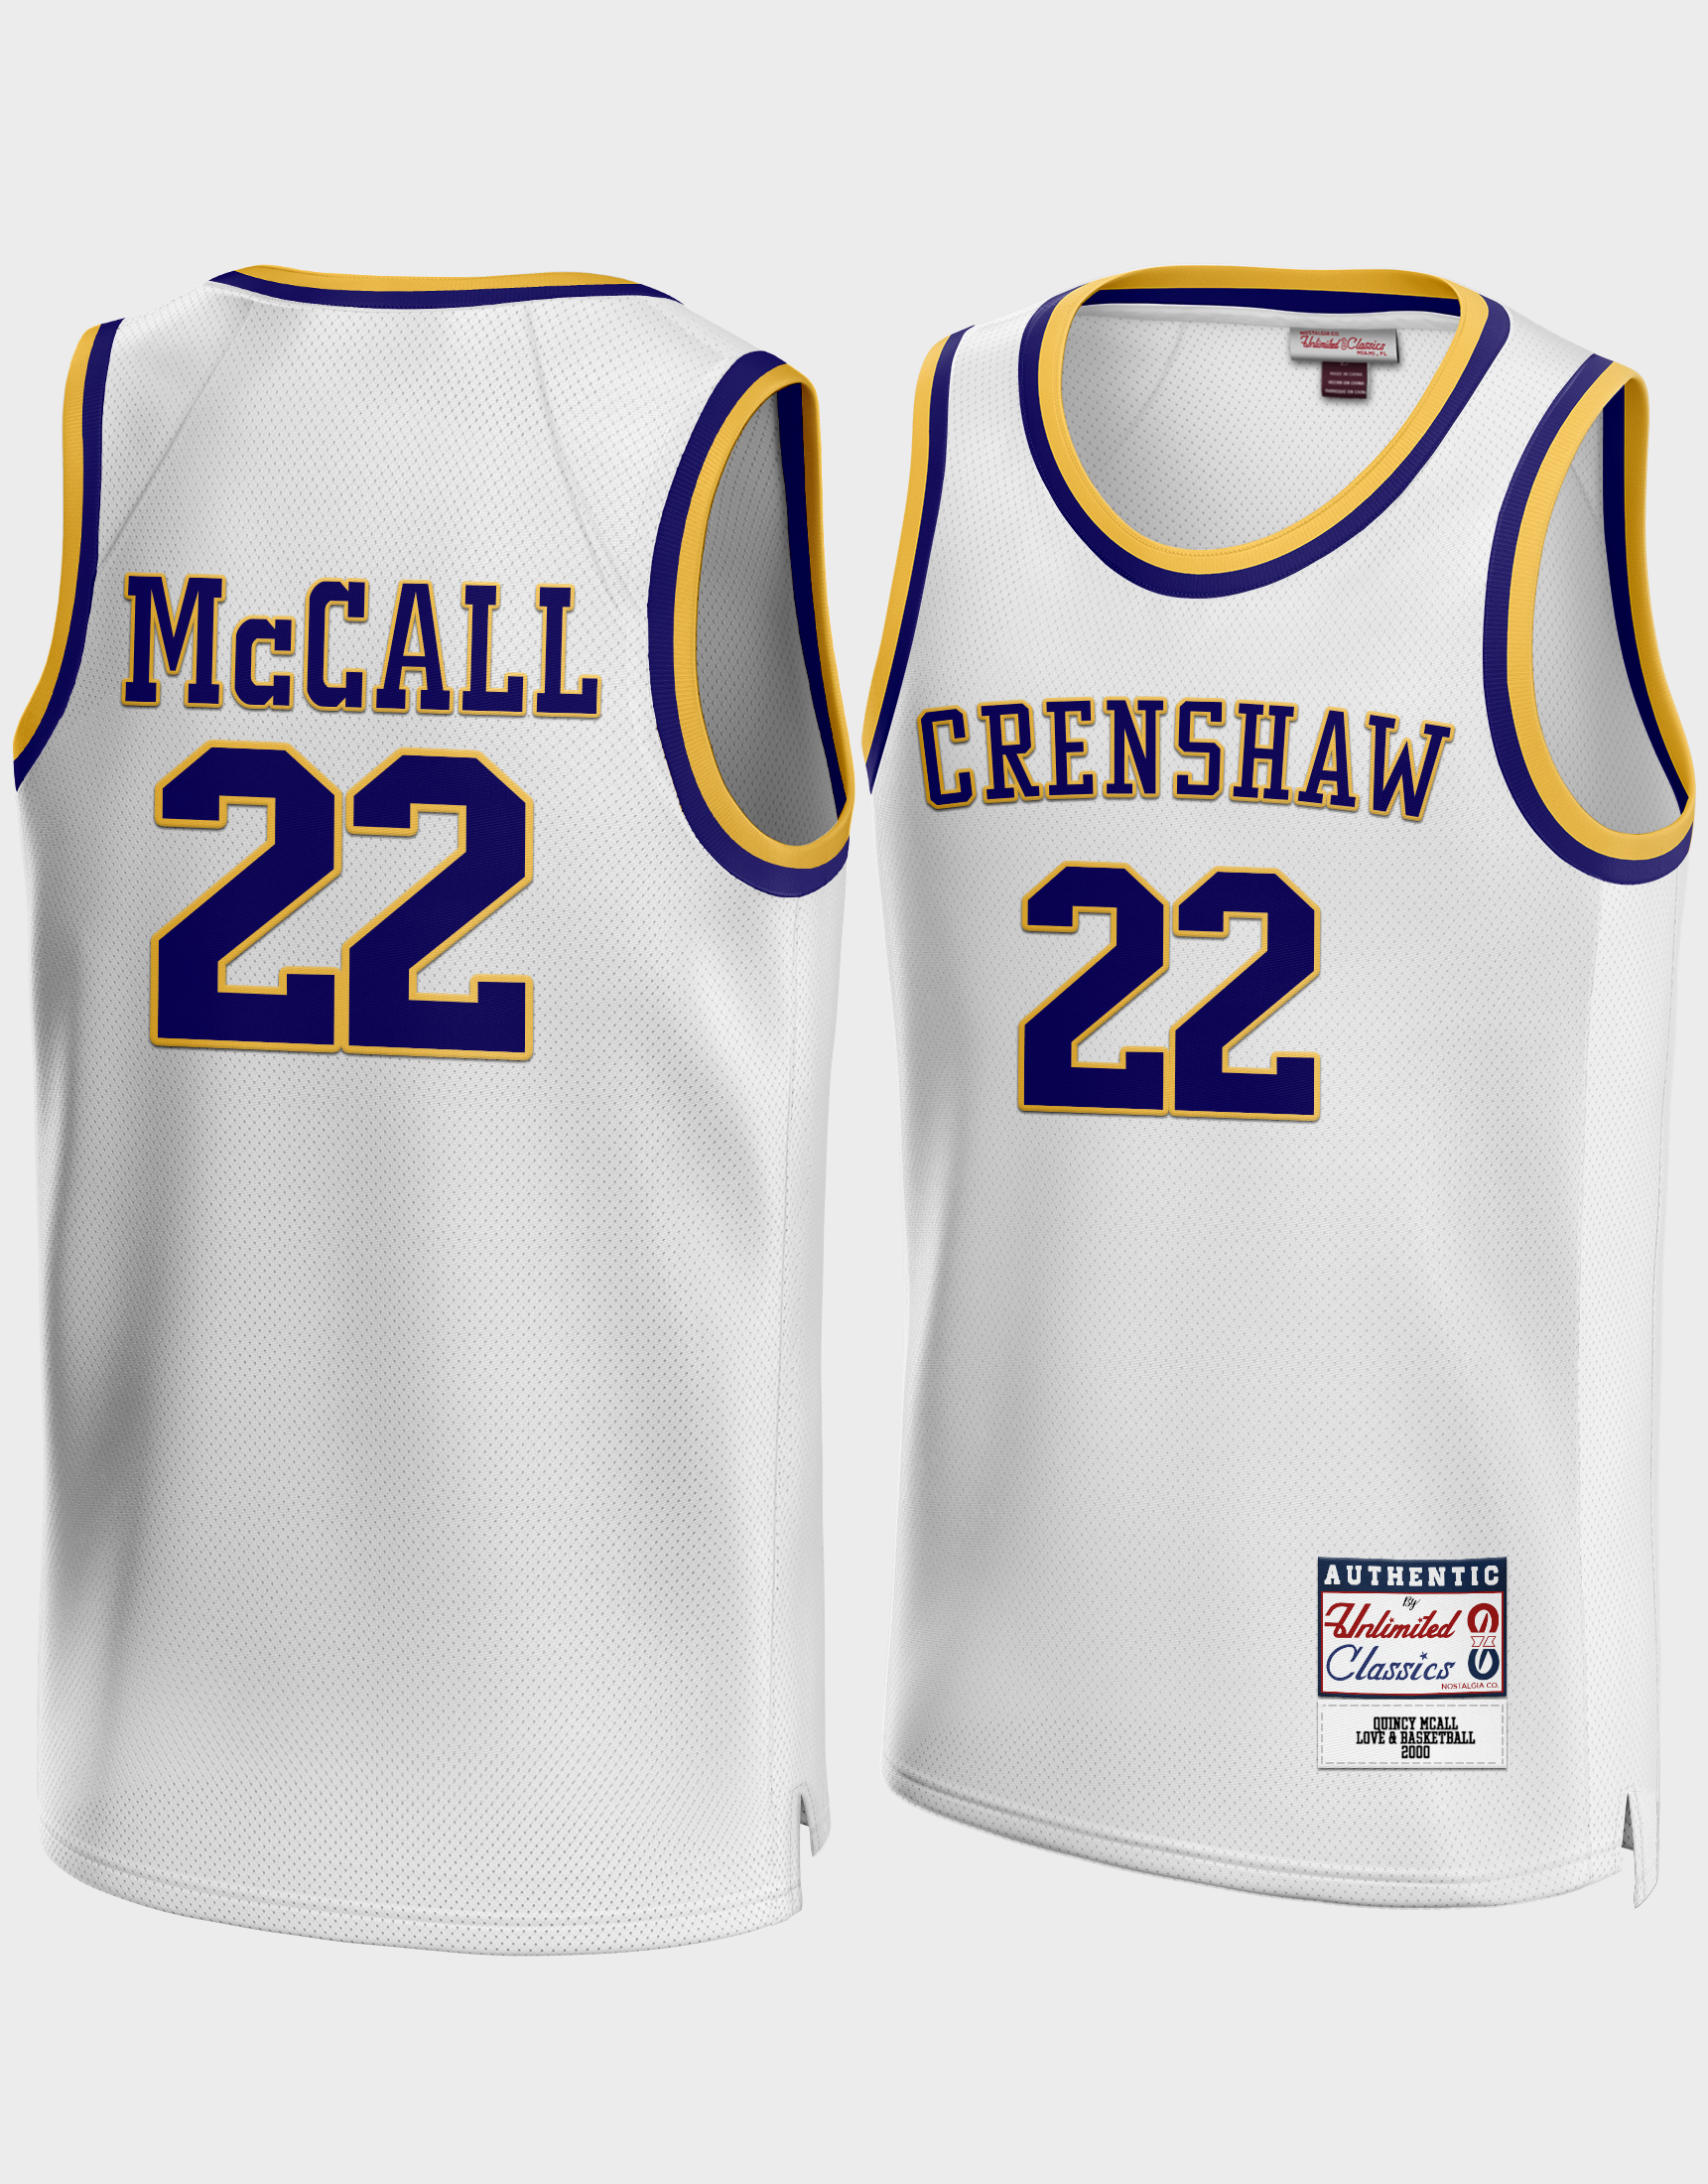 Quincy McCall #22 Love & Basketball Crenshaw Jersey - S